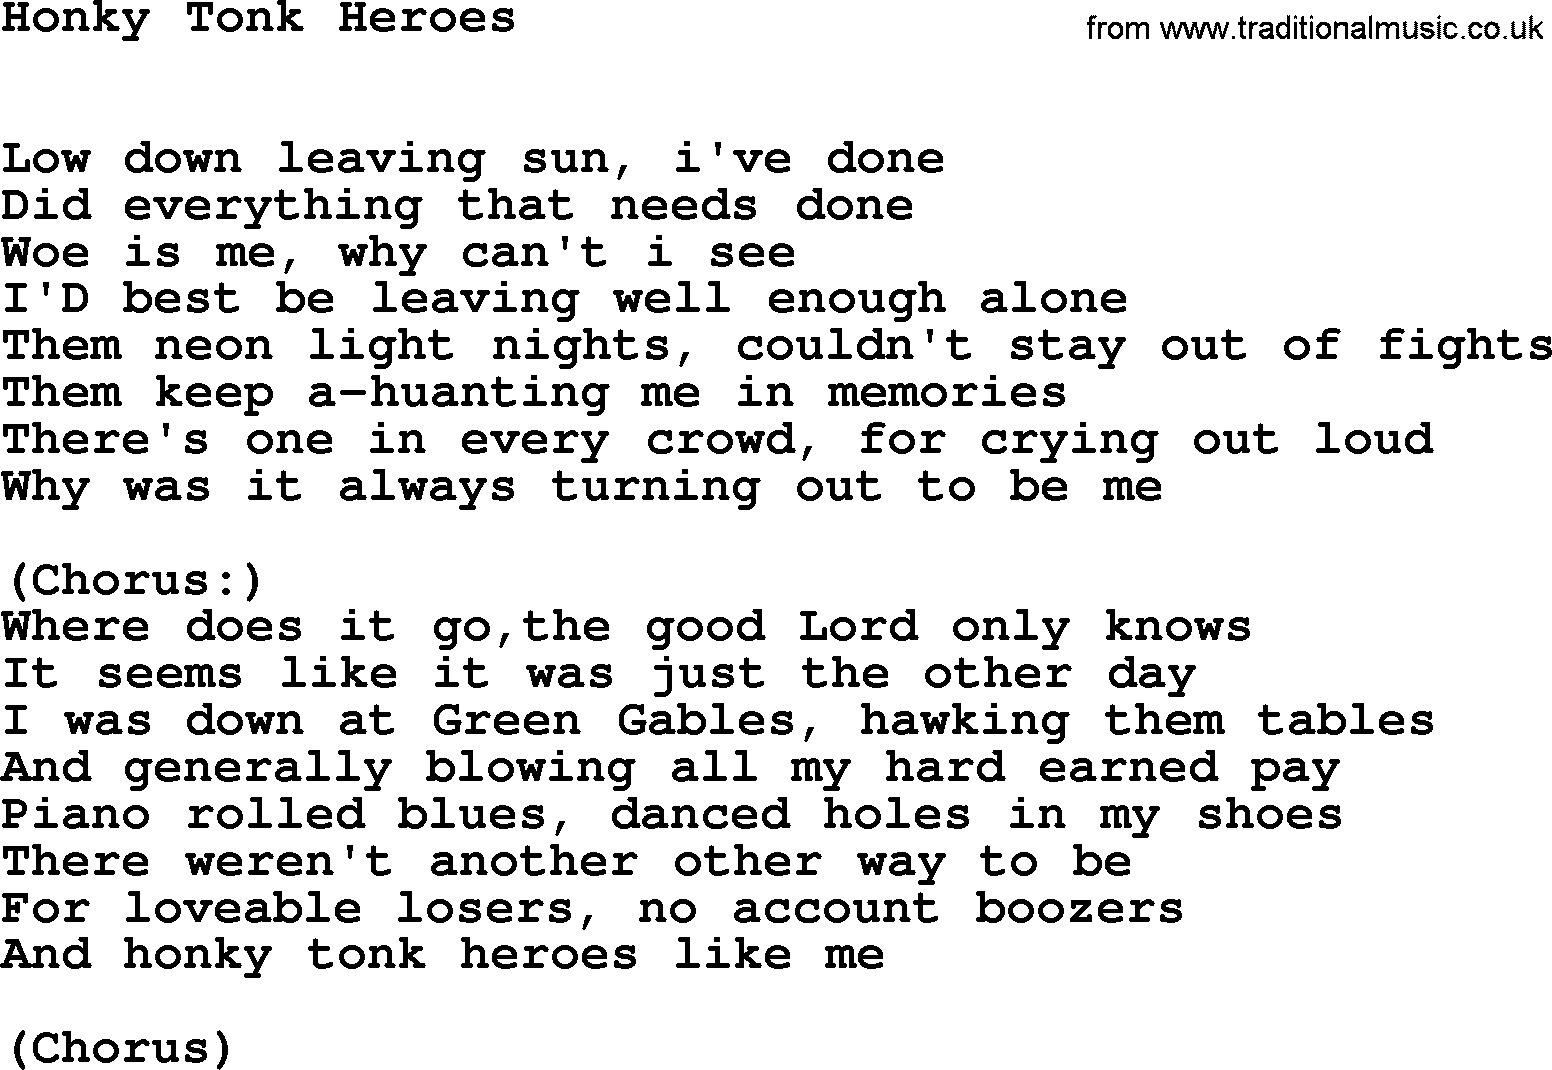 Willie Nelson song: Honky Tonk Heroes lyrics